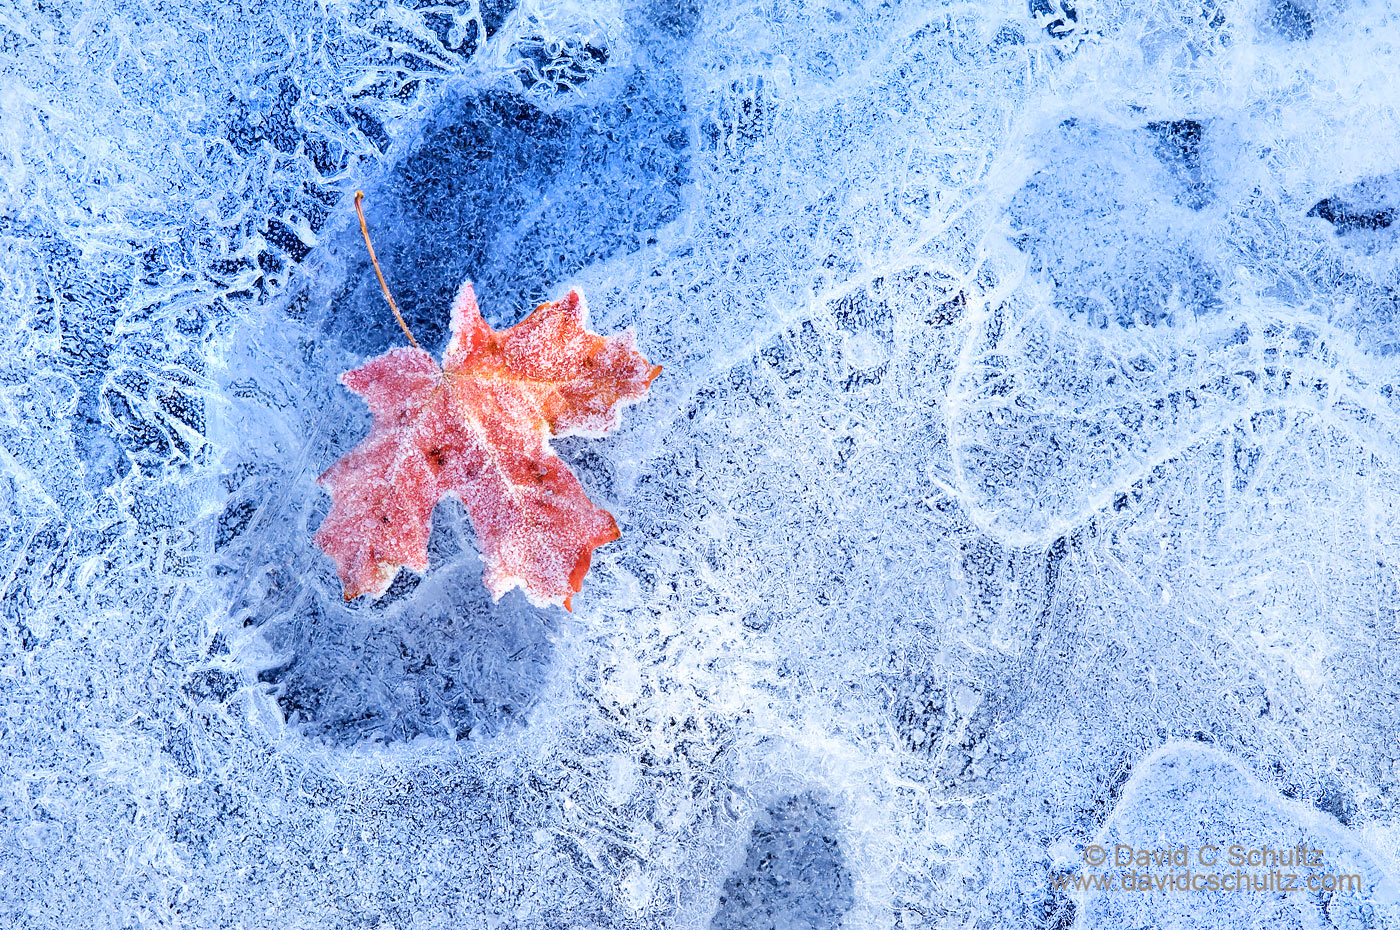 Maple leaf on frozen stream - Image #3-6794